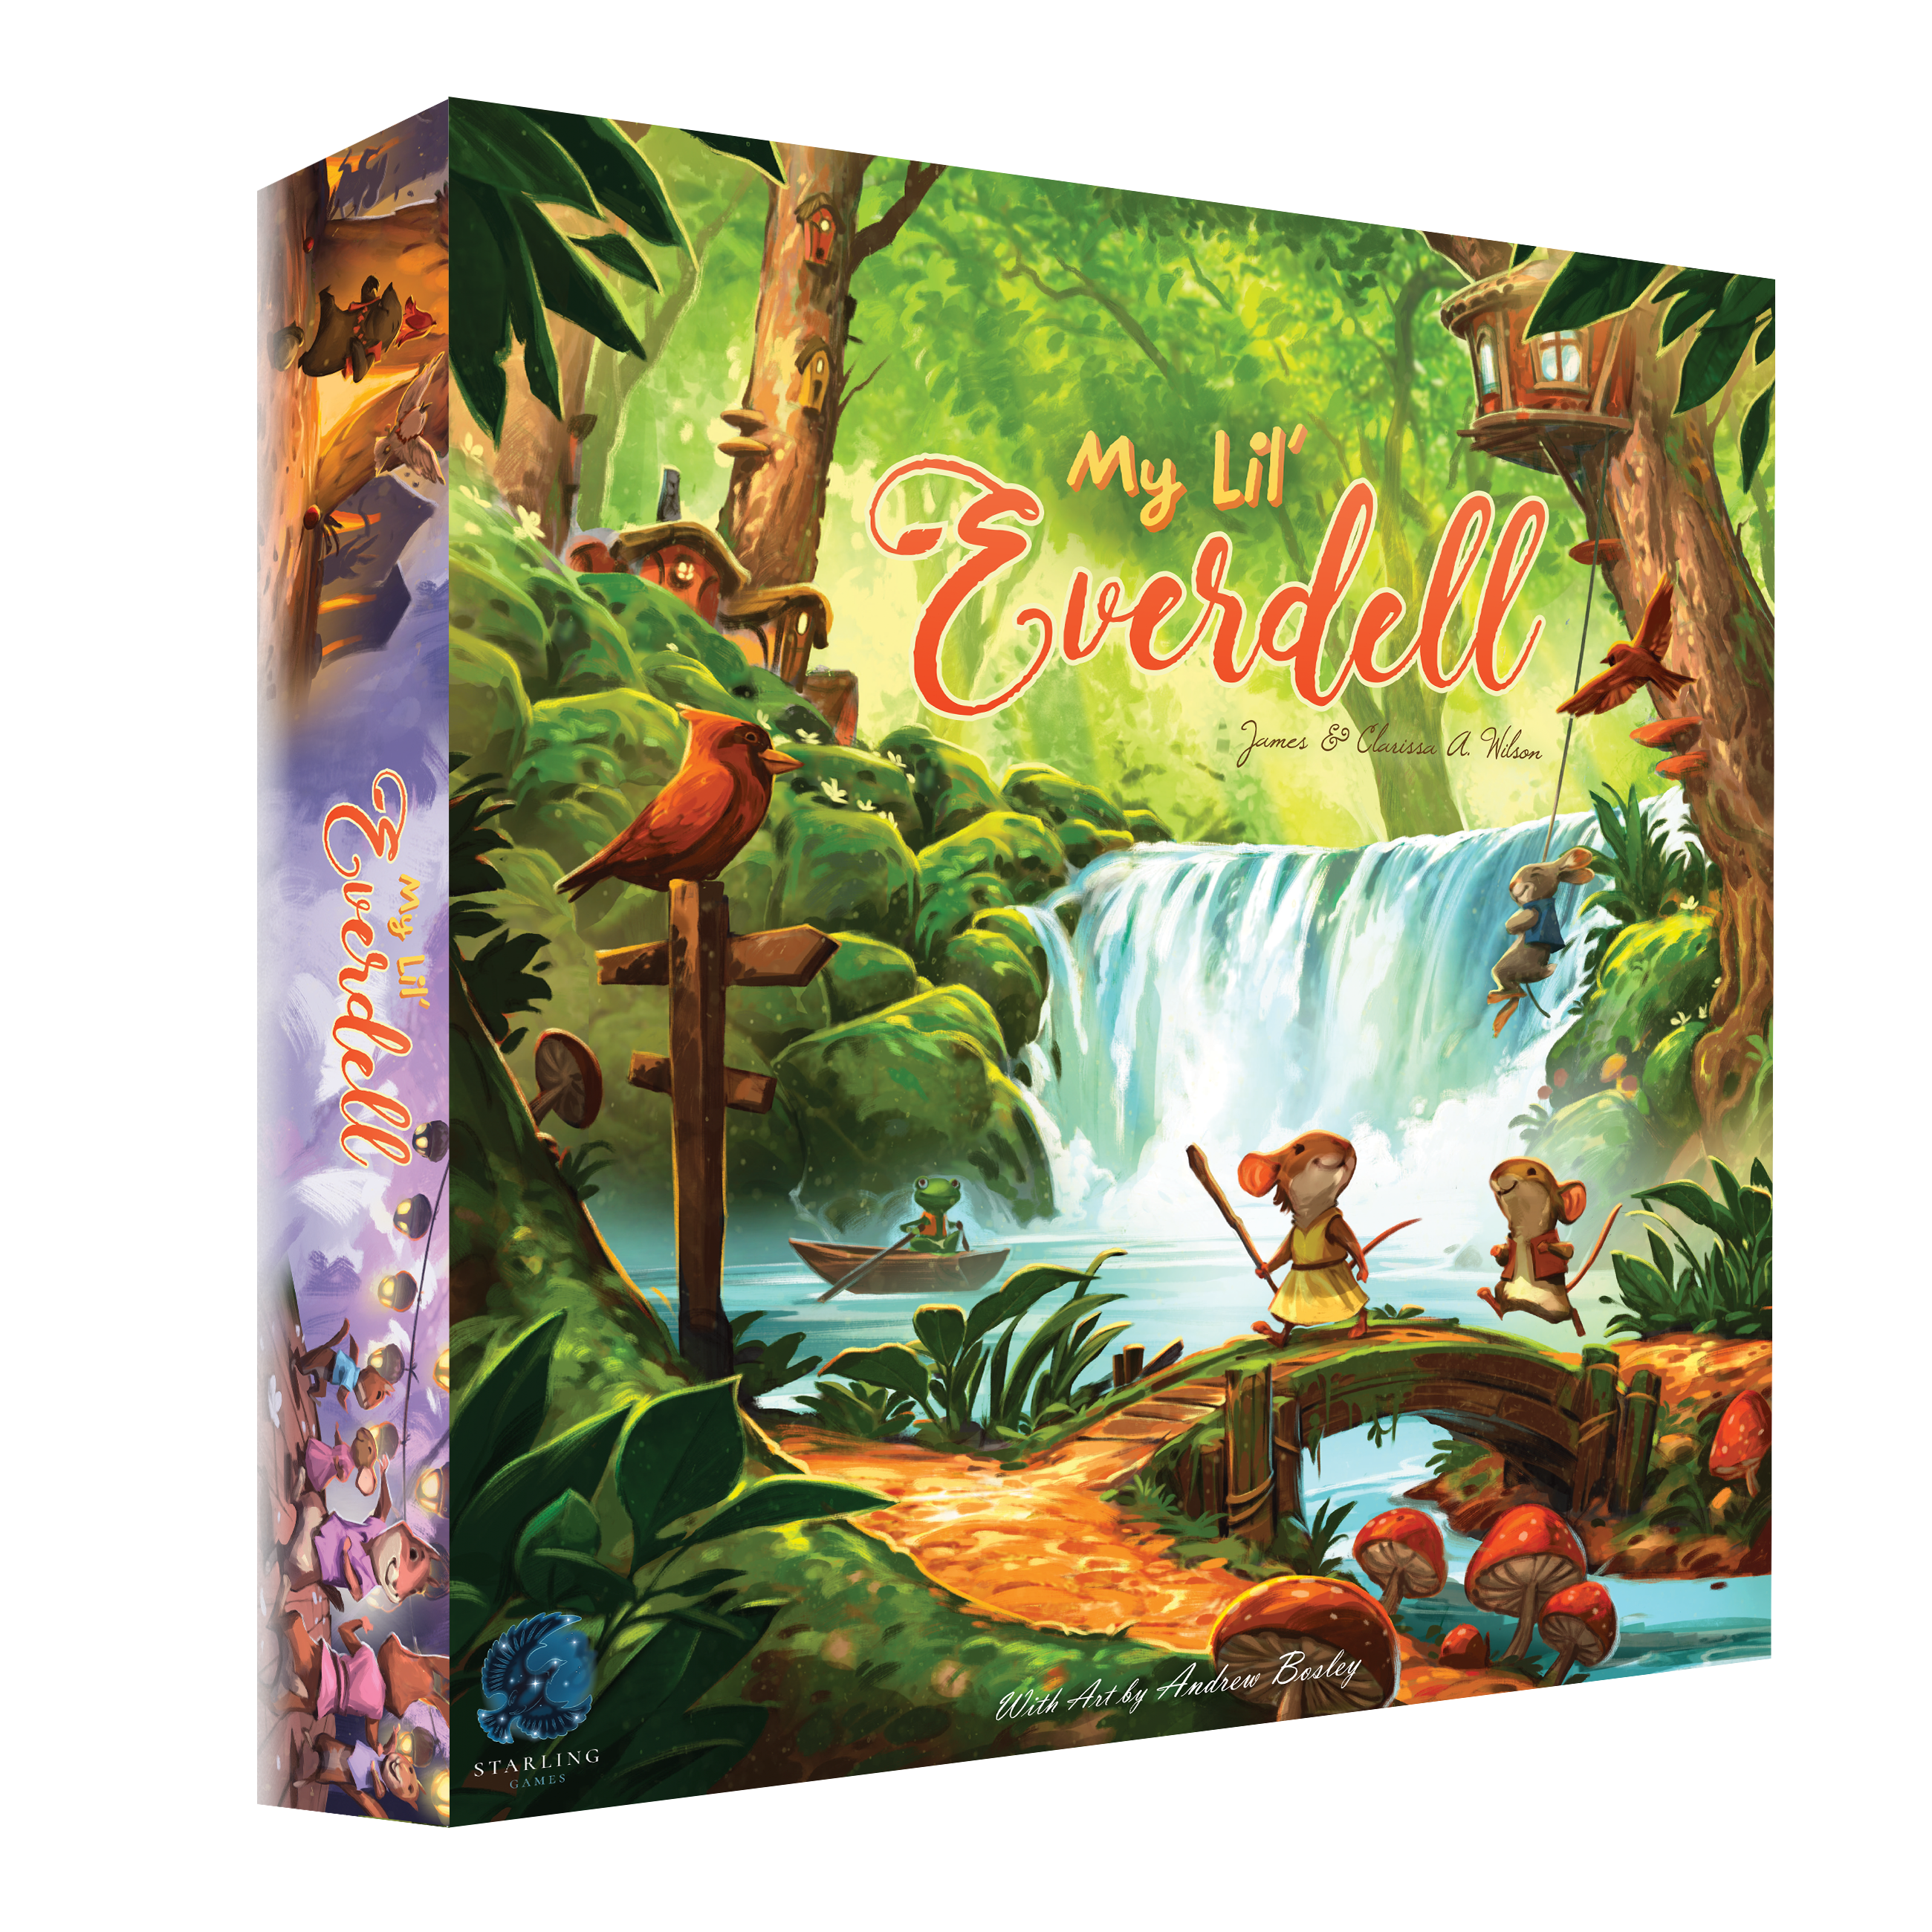 Lost in Jungle - Online Žaidimas